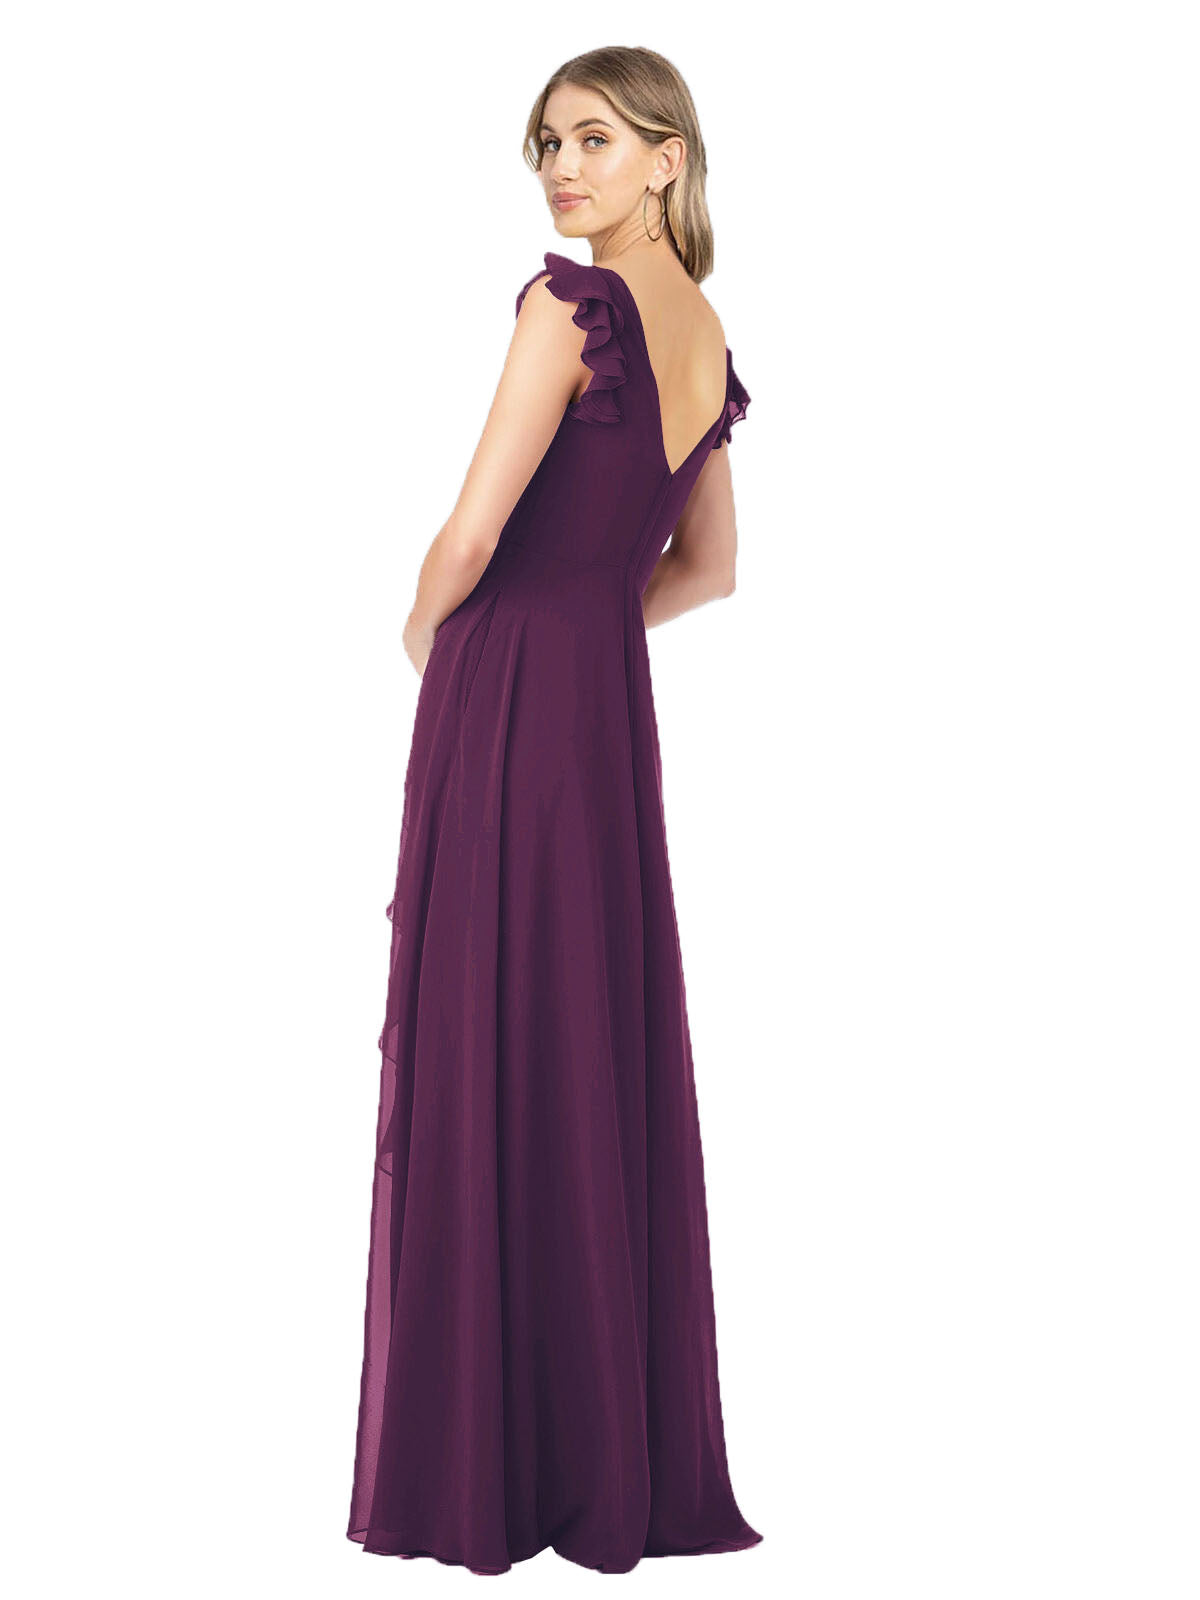 Grape A-Line V-Neck Cap Sleeves Long Bridesmaid Dress Taryn